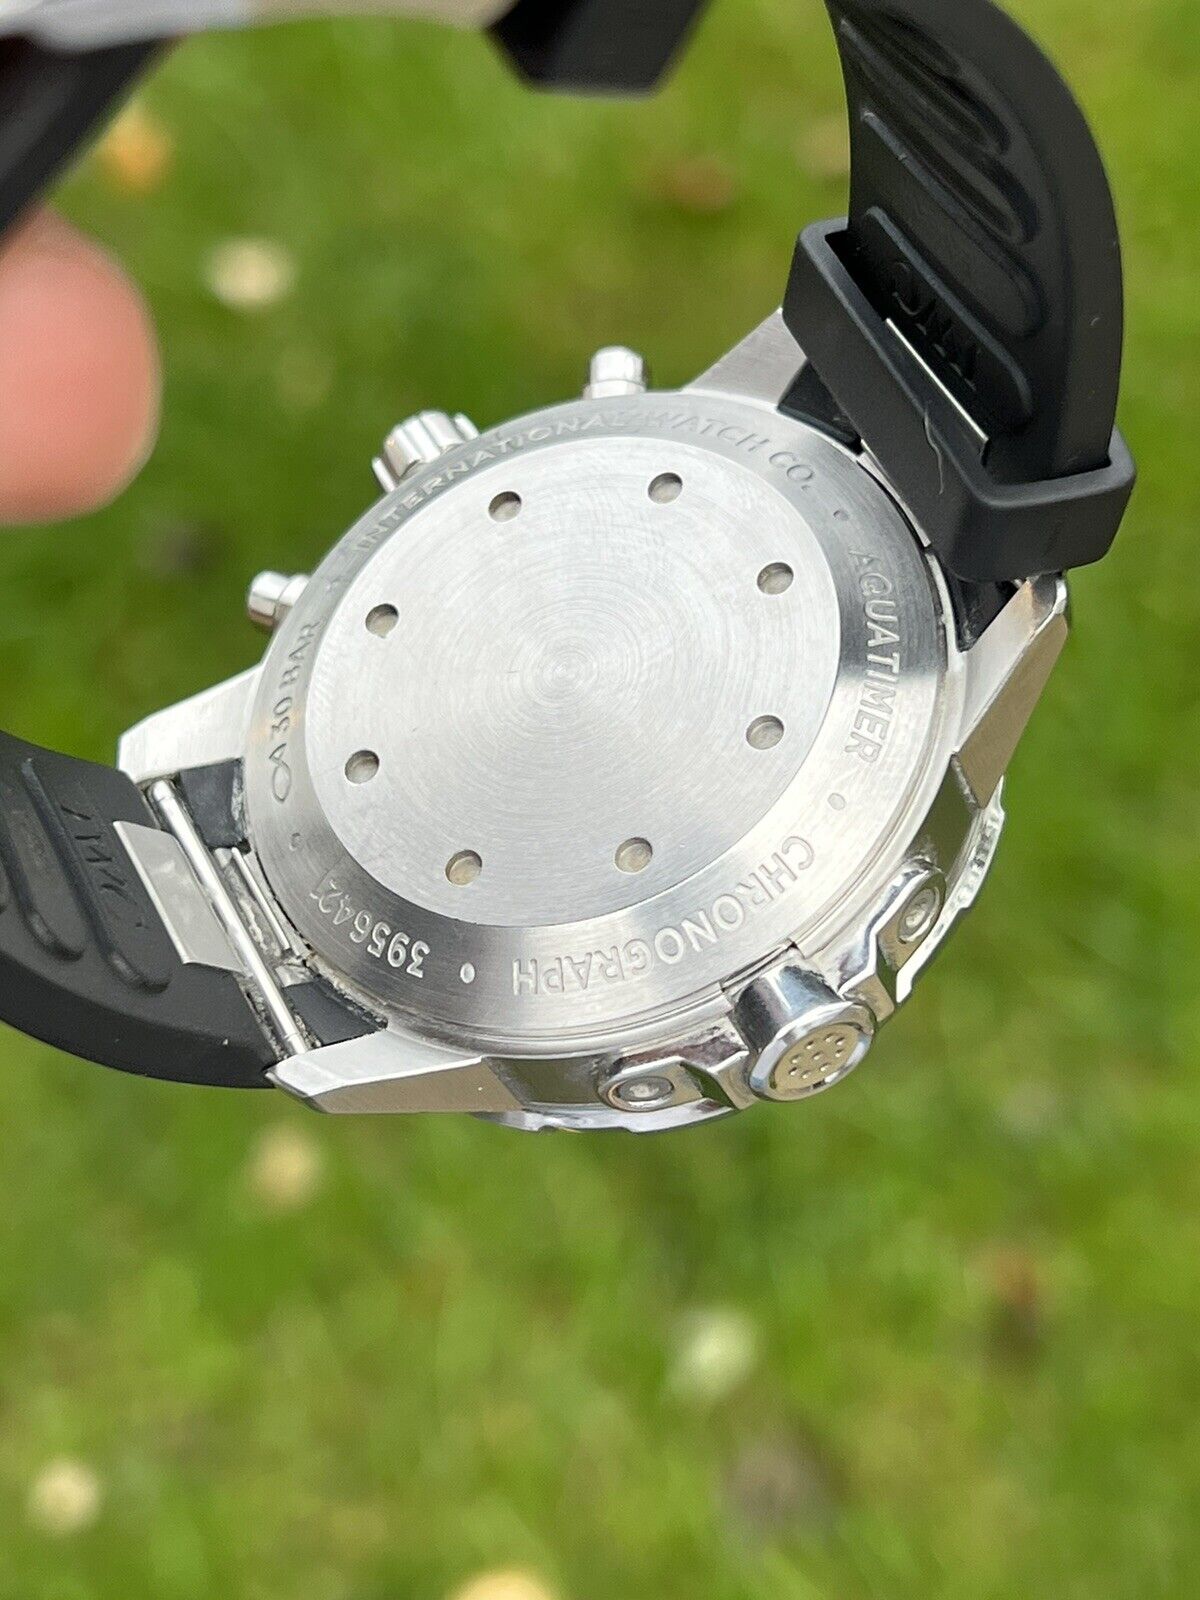 IWC Aquatimer Men's Black Watch - IW376803 for sale online | eBay